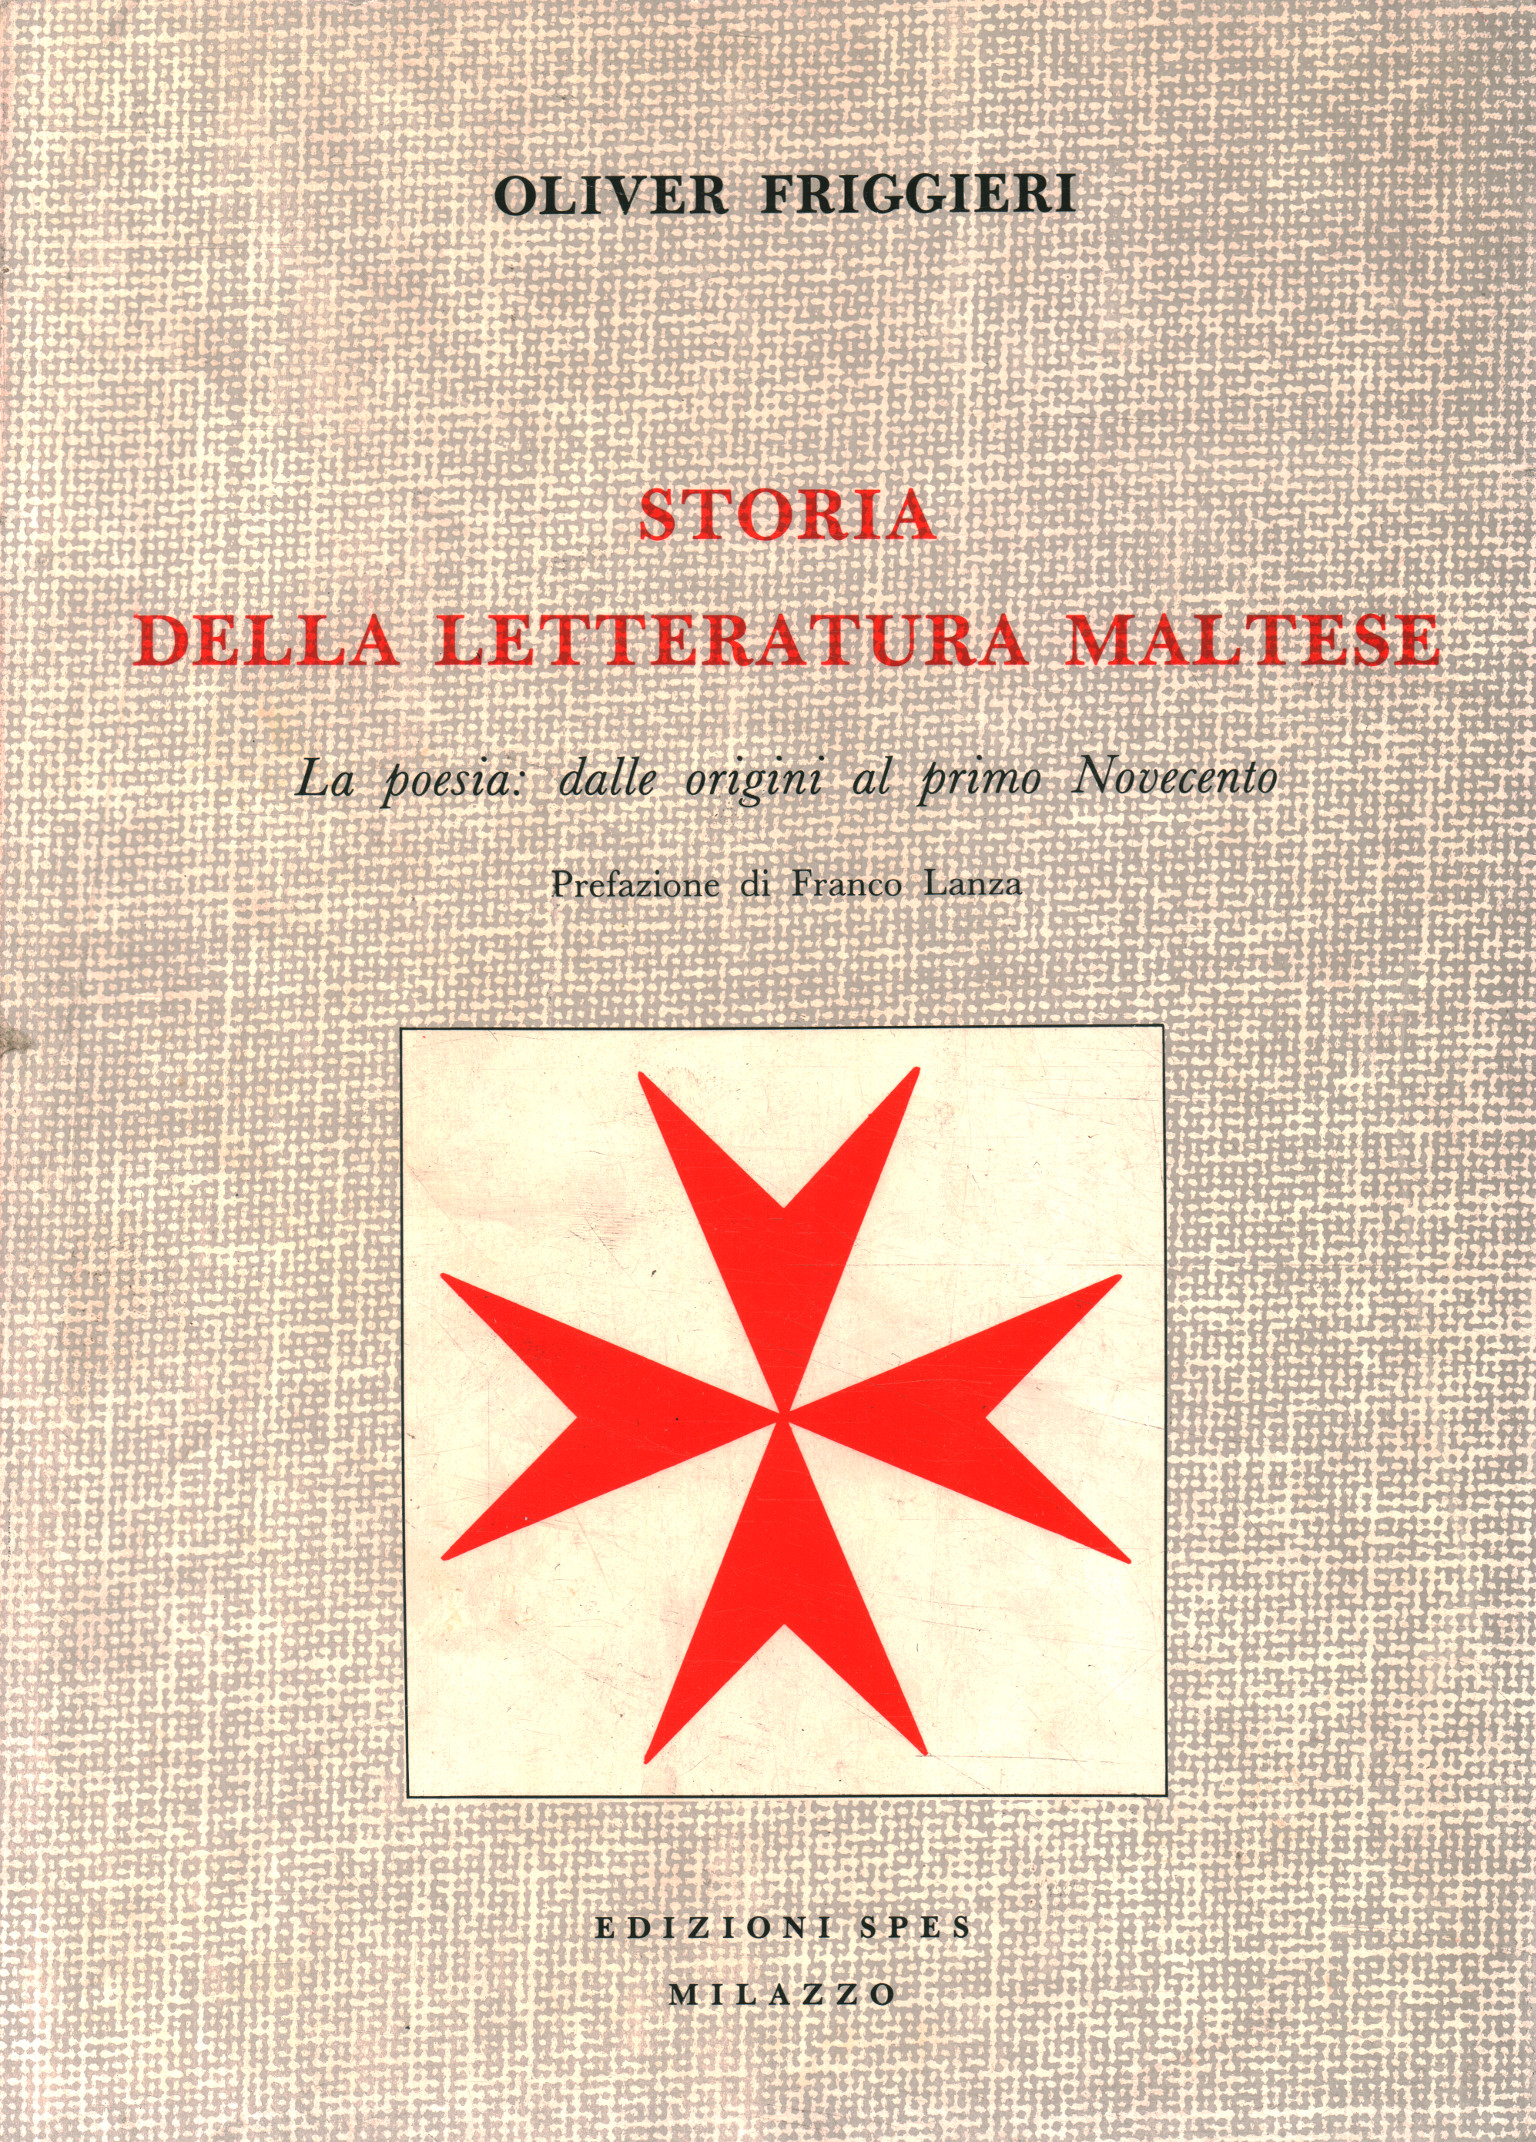 History of Maltese literature